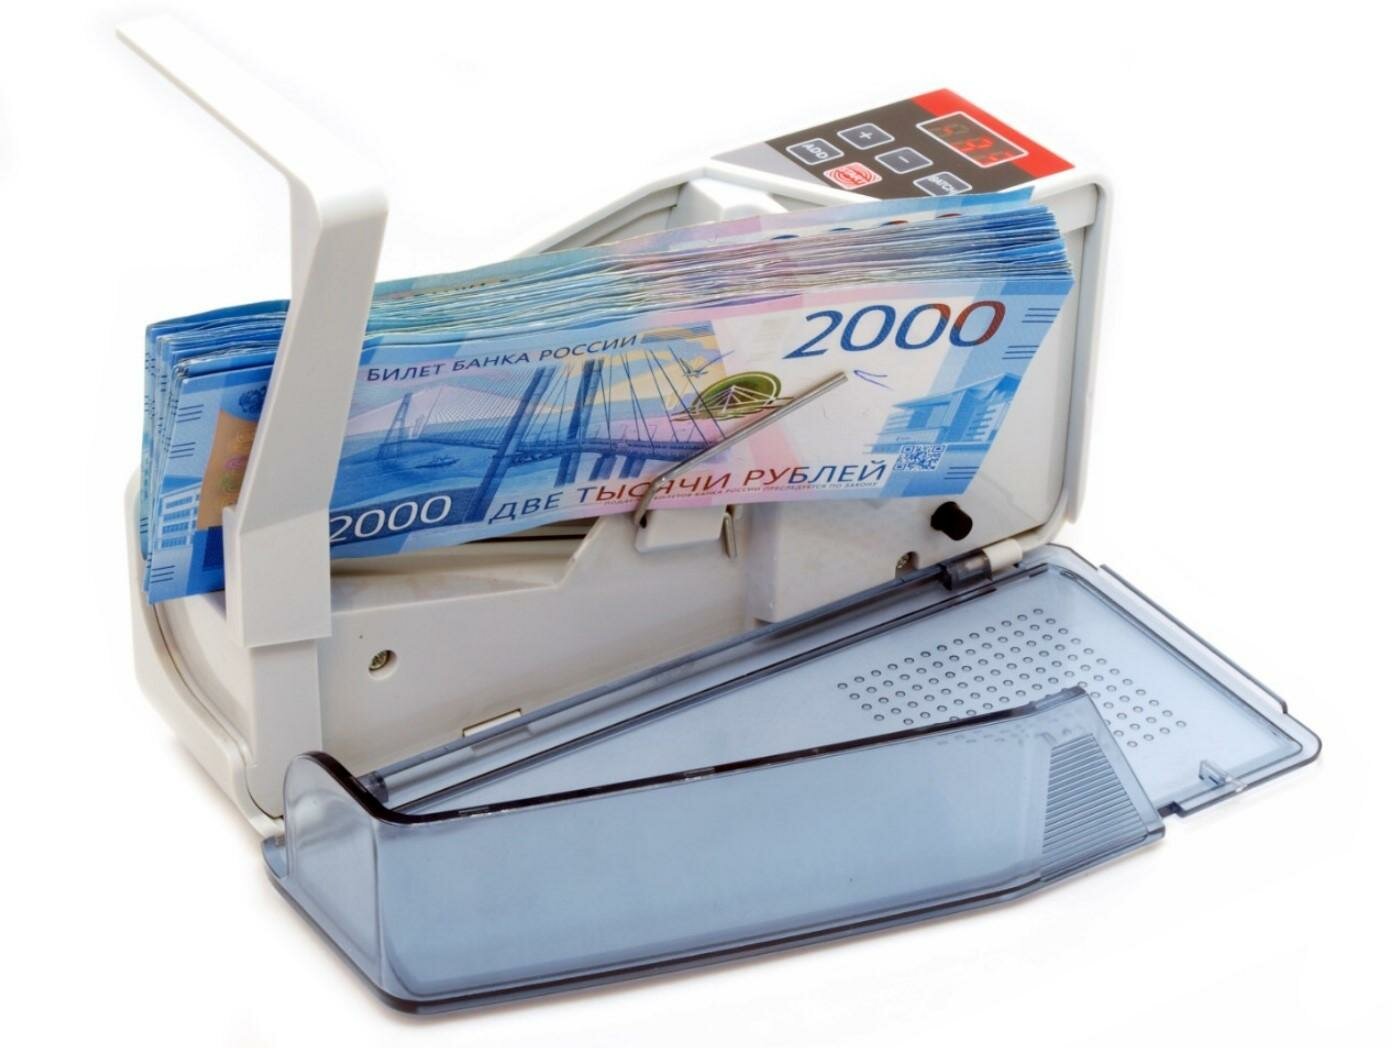 Портативные счетчики банкнот - FJ-V40 DOLS-PRO (V82437FJV), мини счётная машинка для купюр